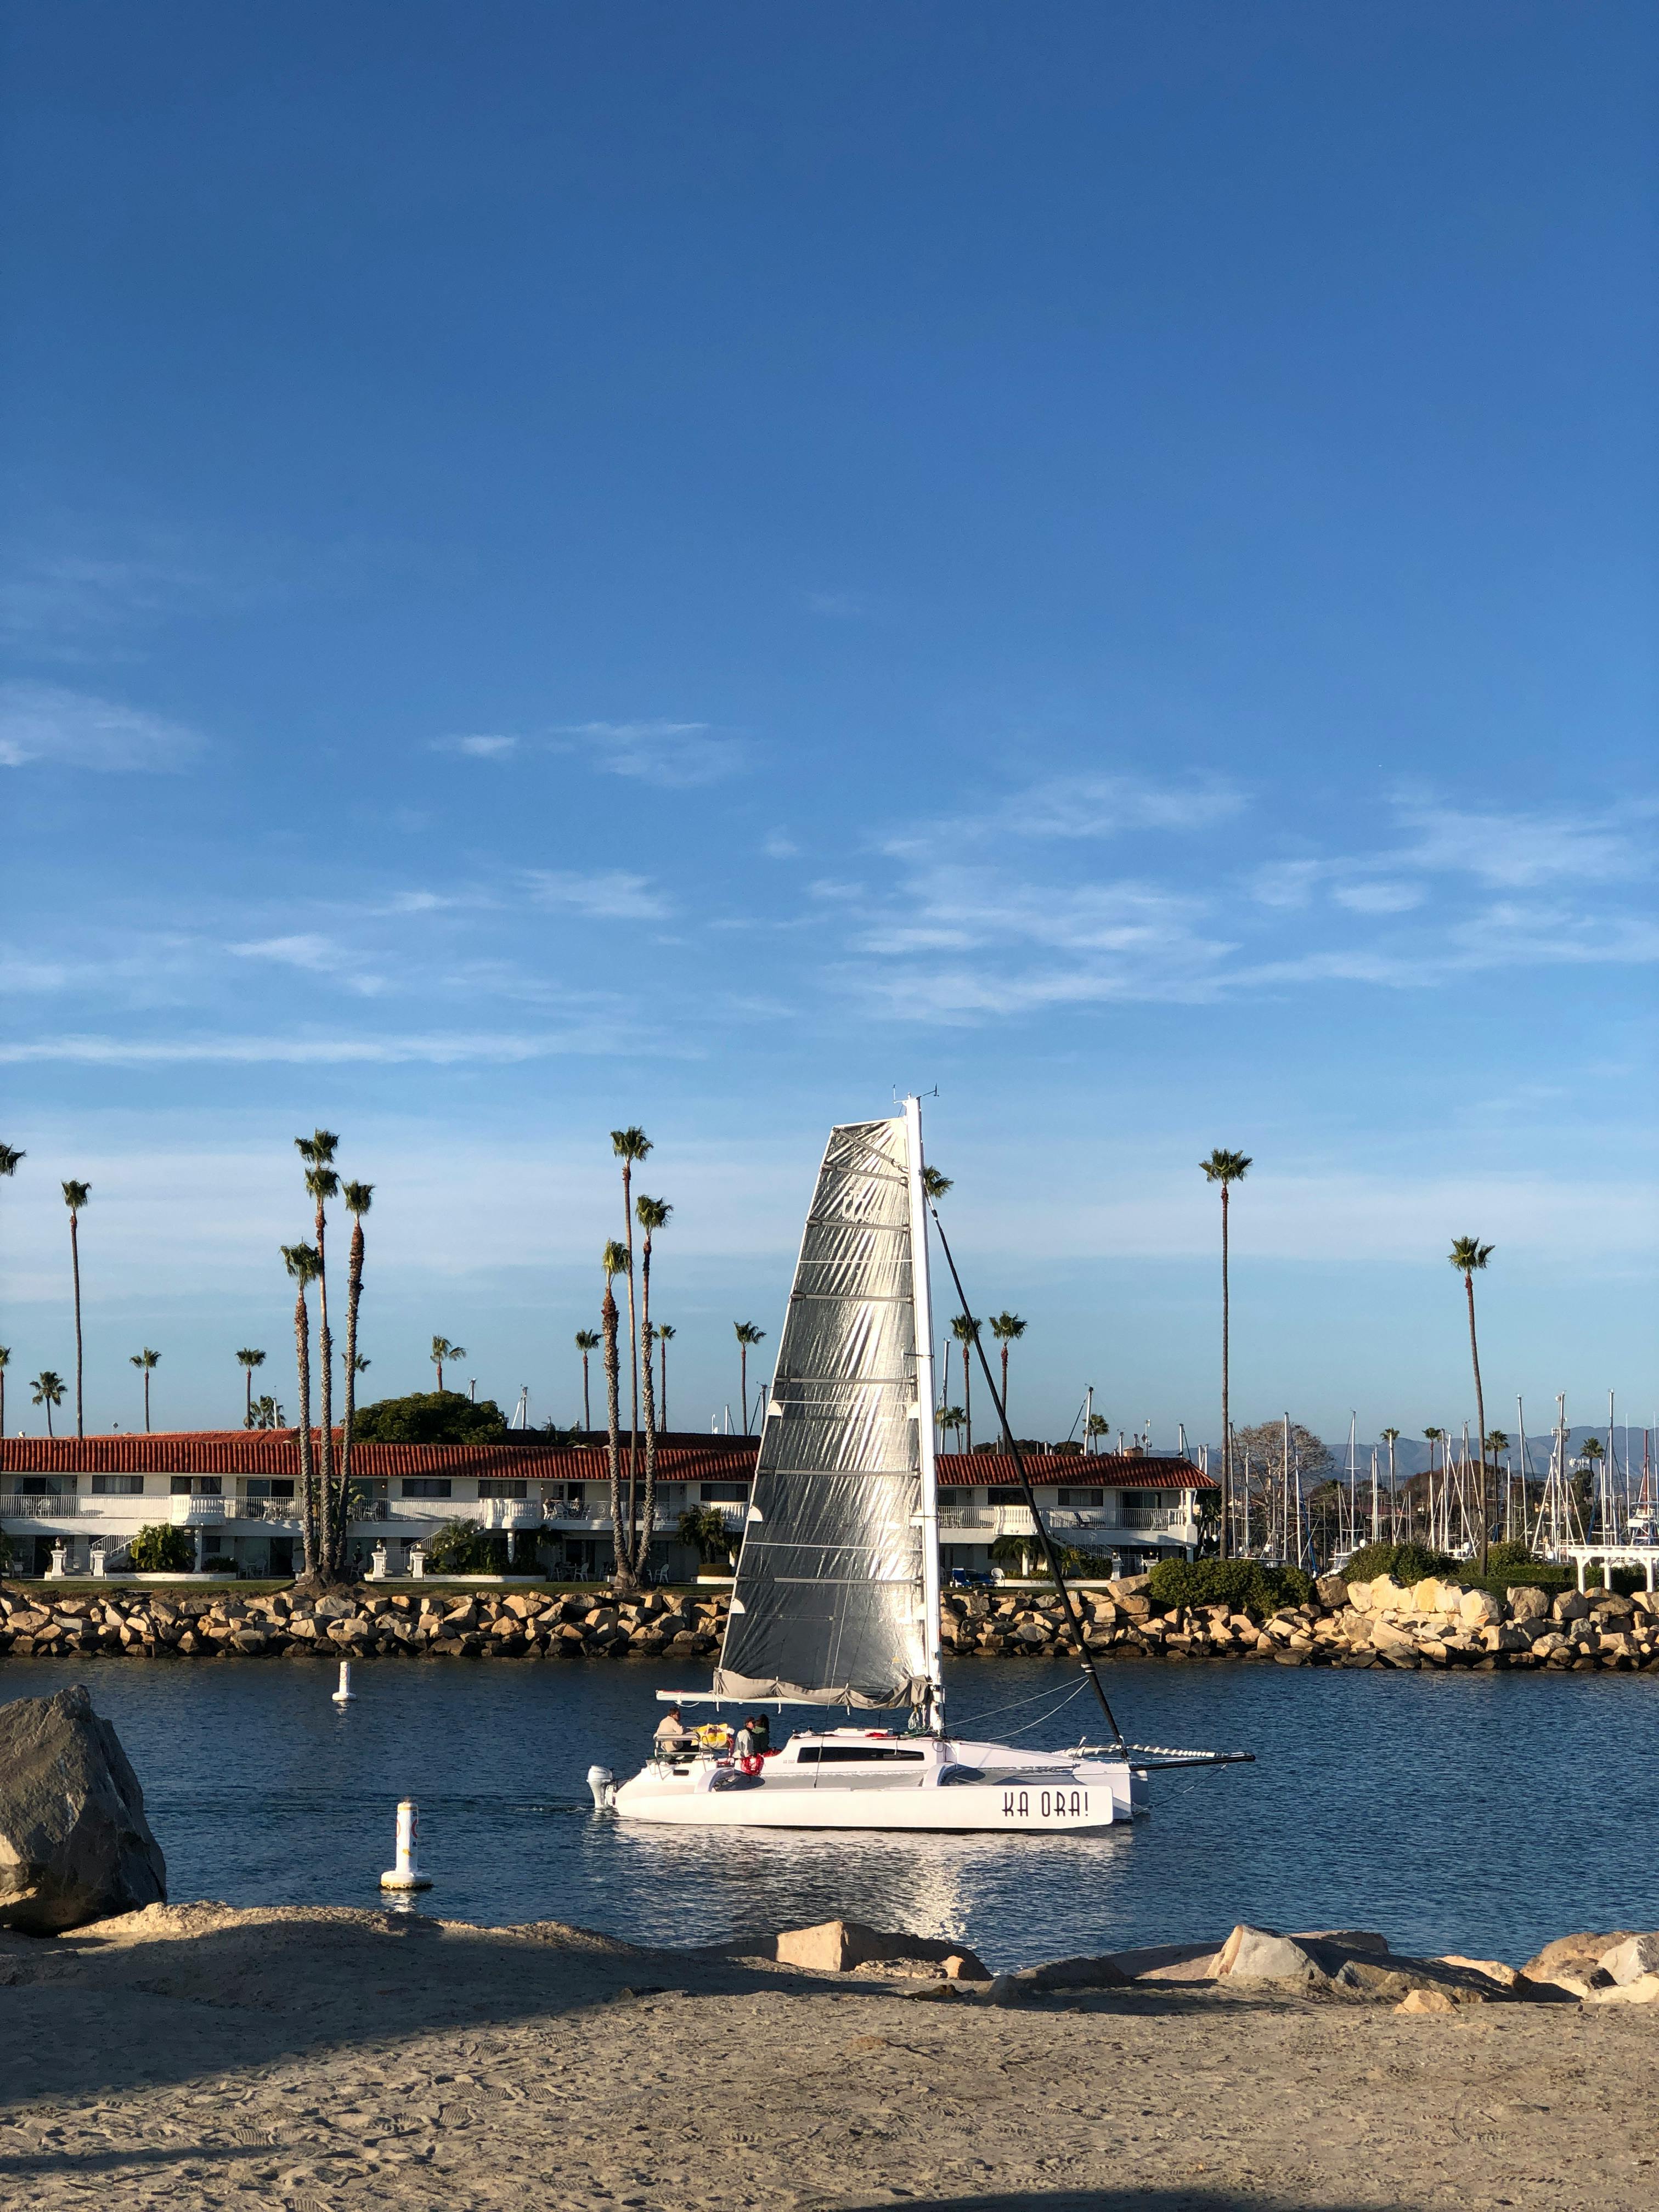 Free stock photo of harbor, ocean, sailboat